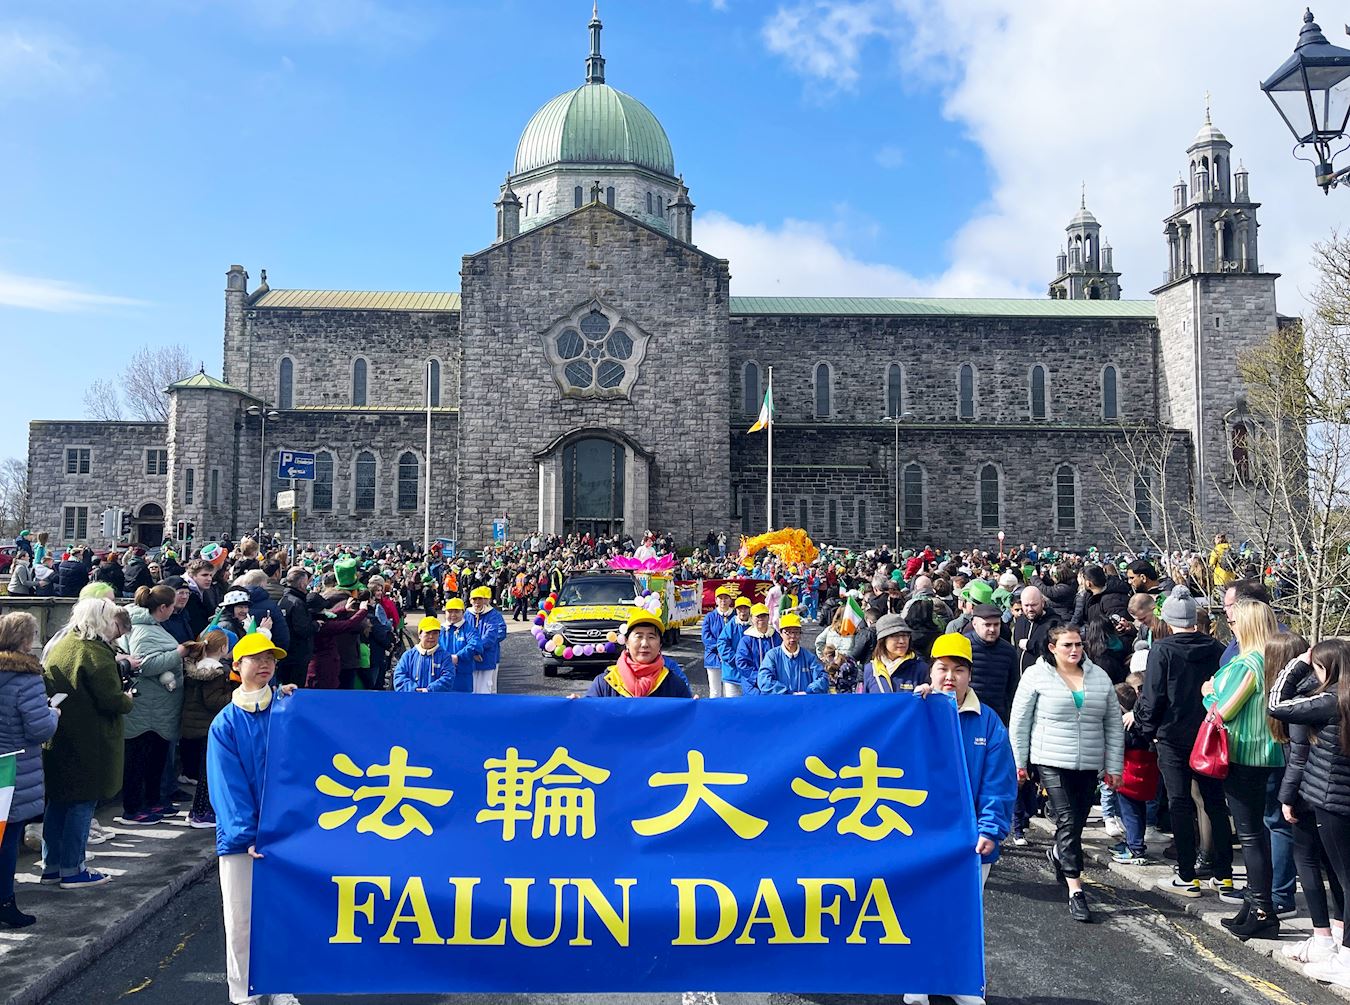 Image for article Ірландія. Практикувальники Фалунь Дафа беруть участь у параді на честь Дня святого Патрика в Голуеї